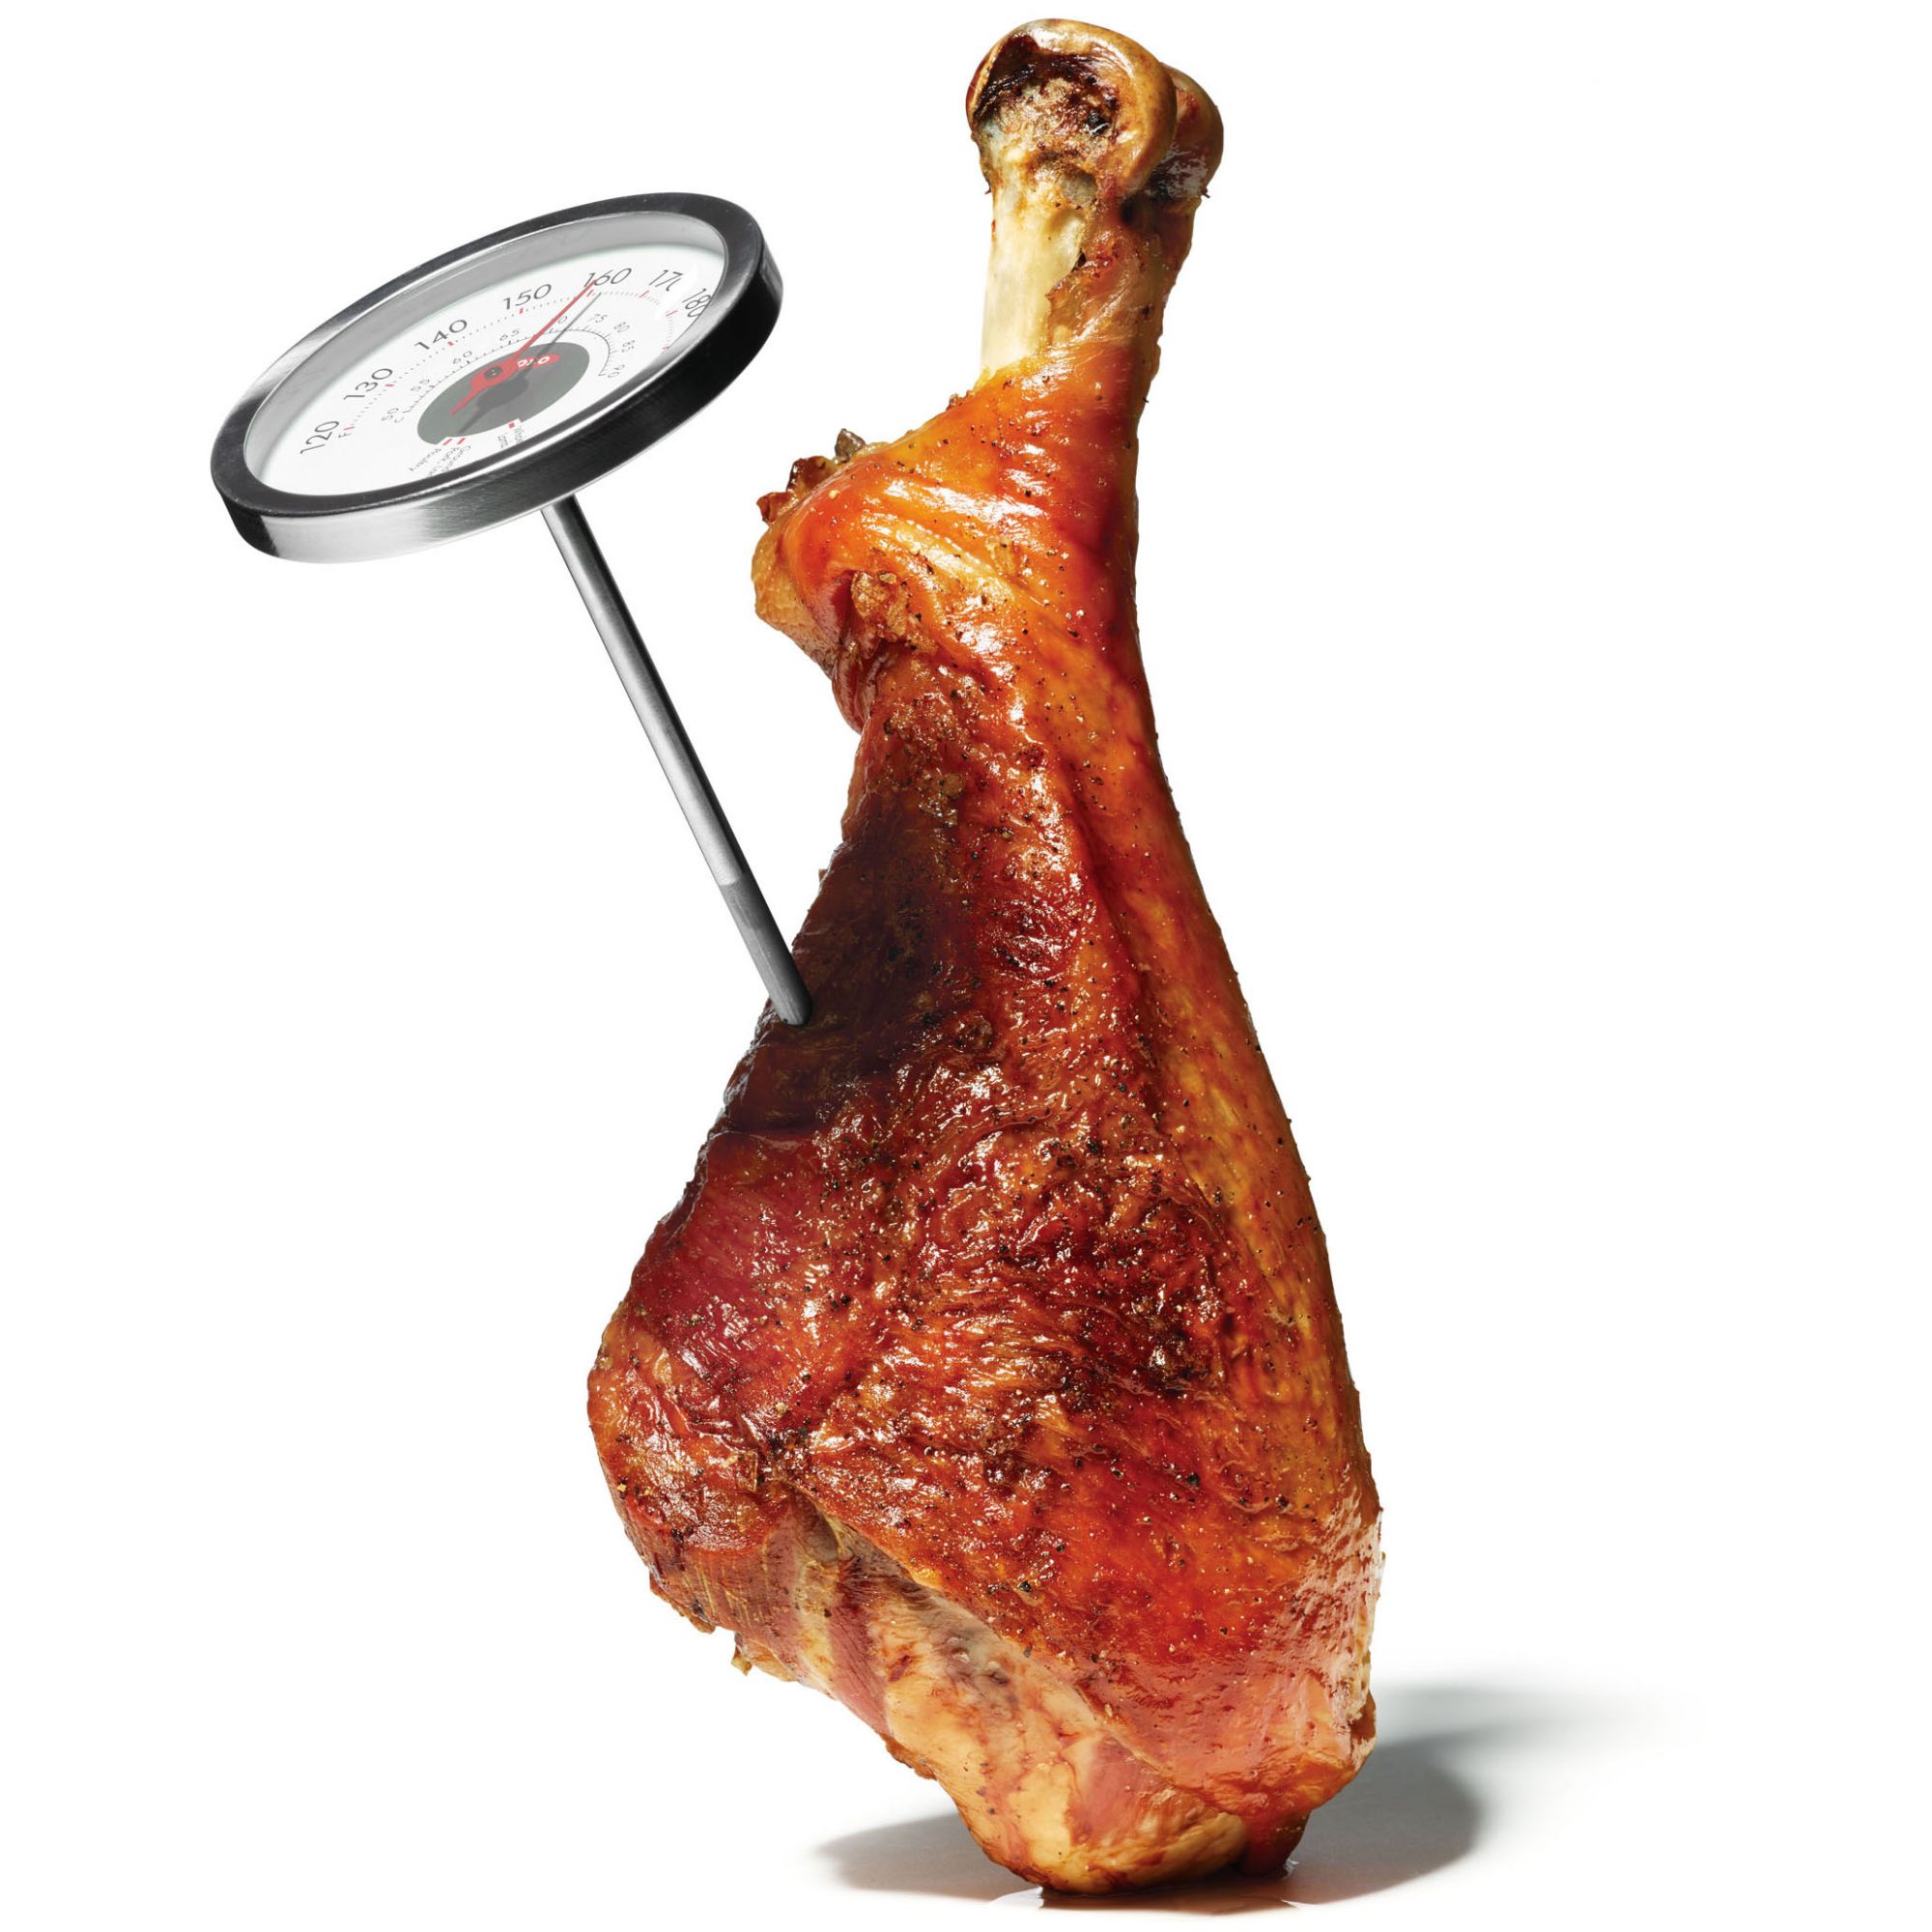 thermometer in turkey leg